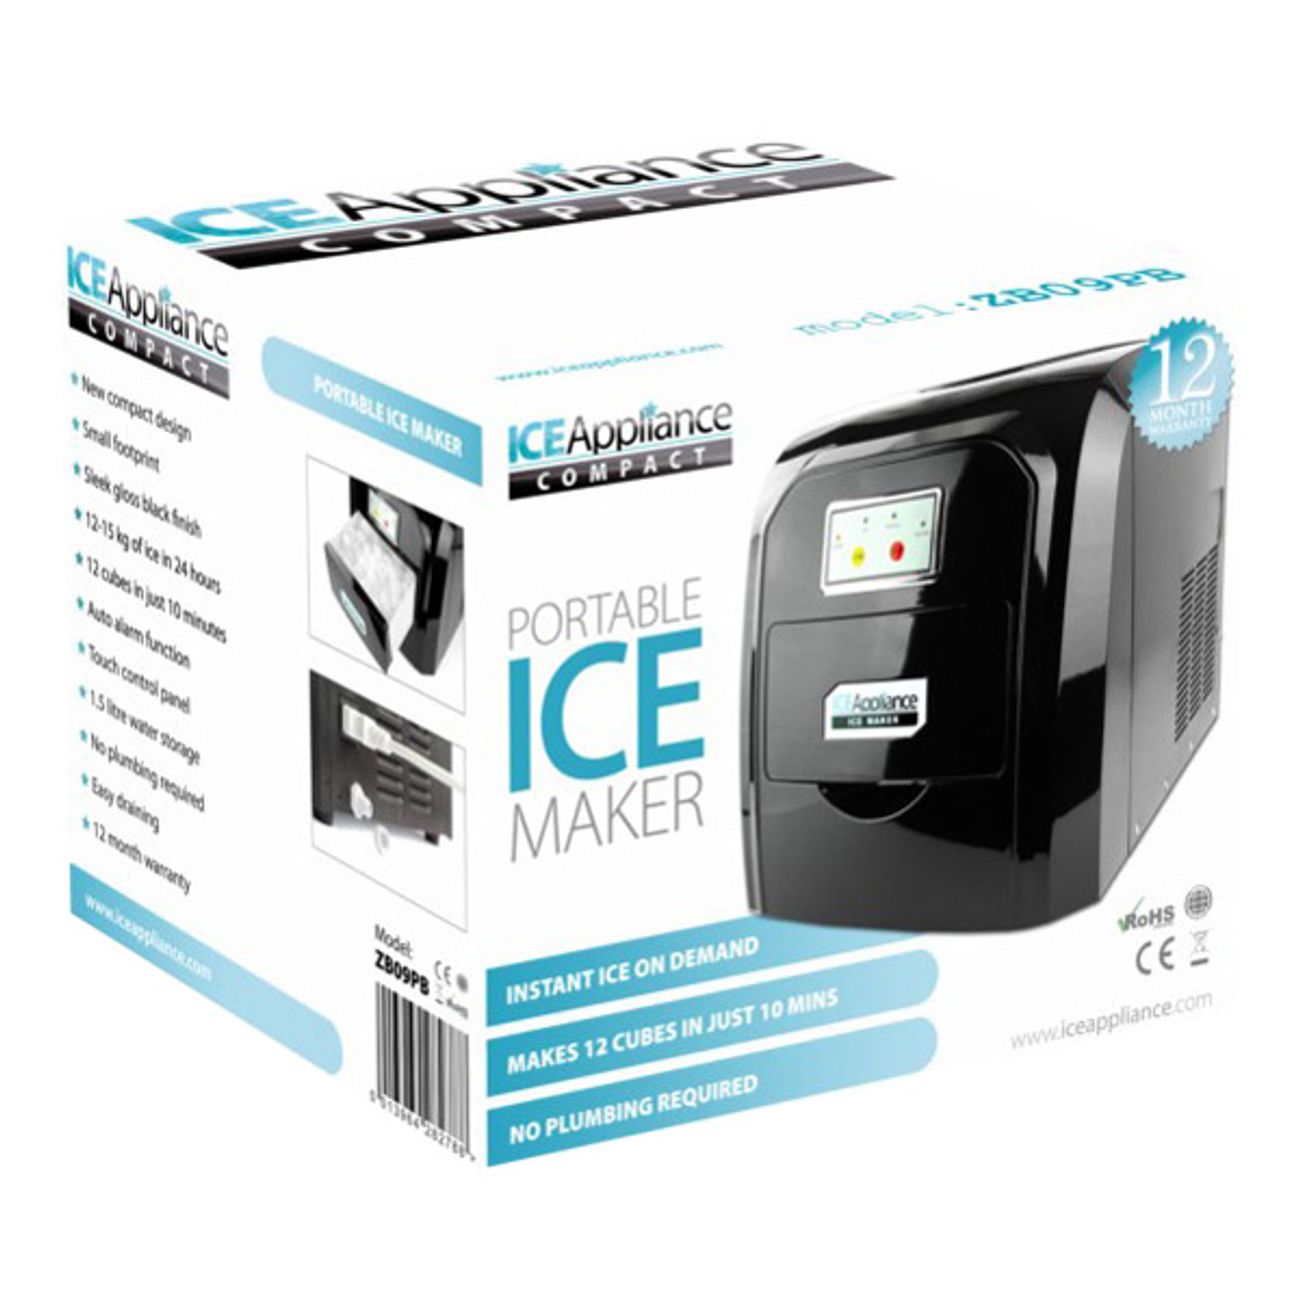 ice-appliace-kompakt-ismaskin-4